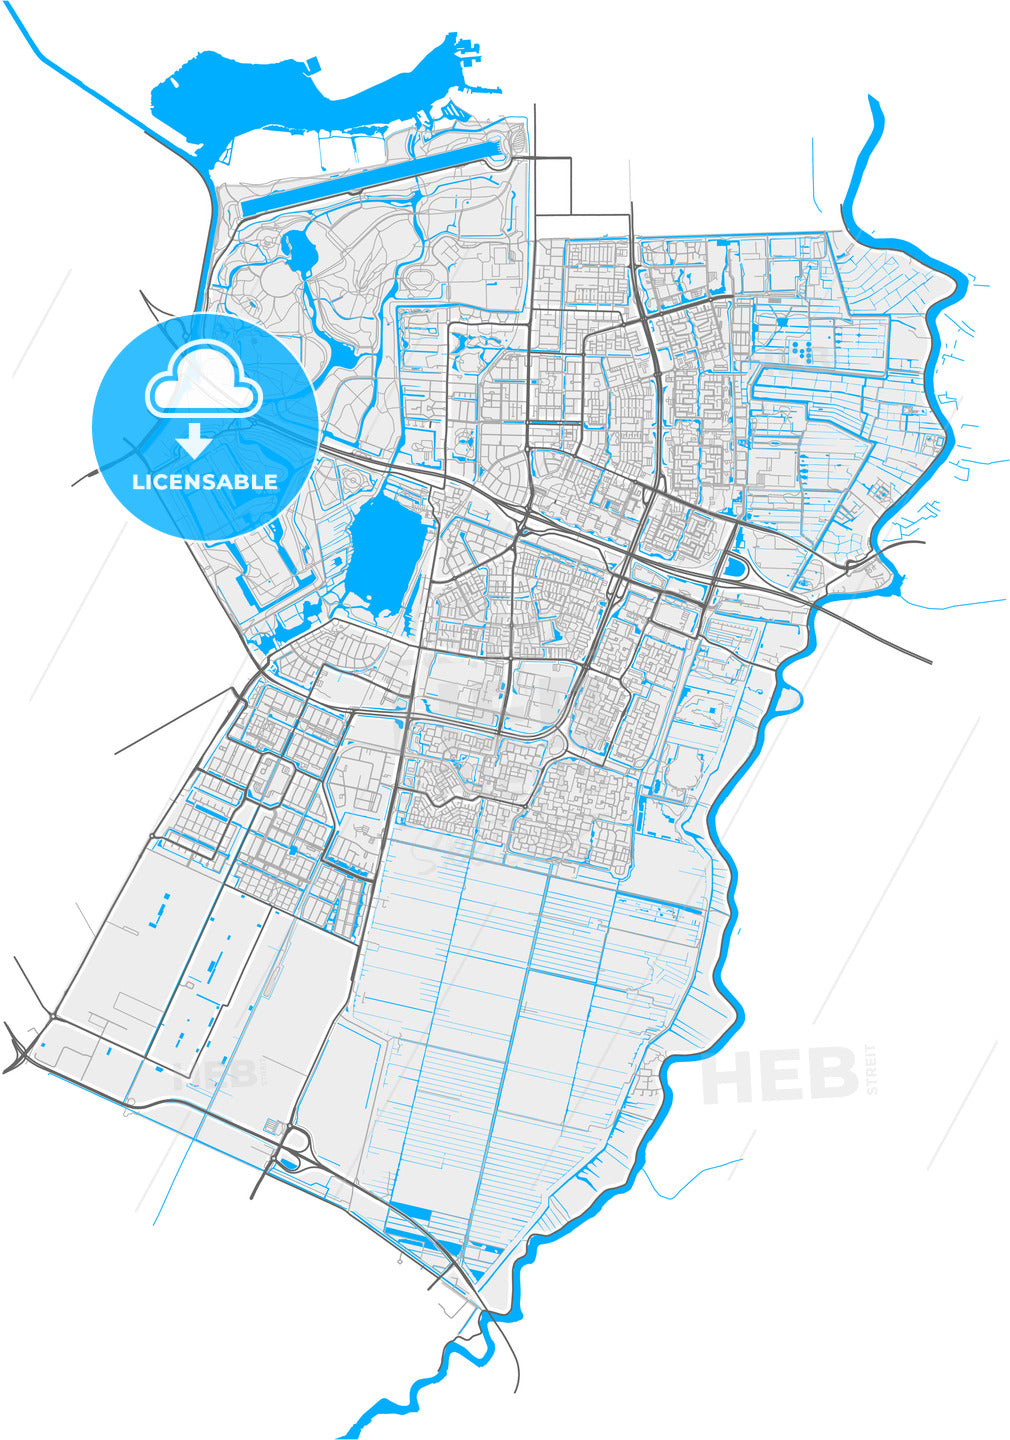 Amstelveen, North Holland, Netherlands, high quality vector map